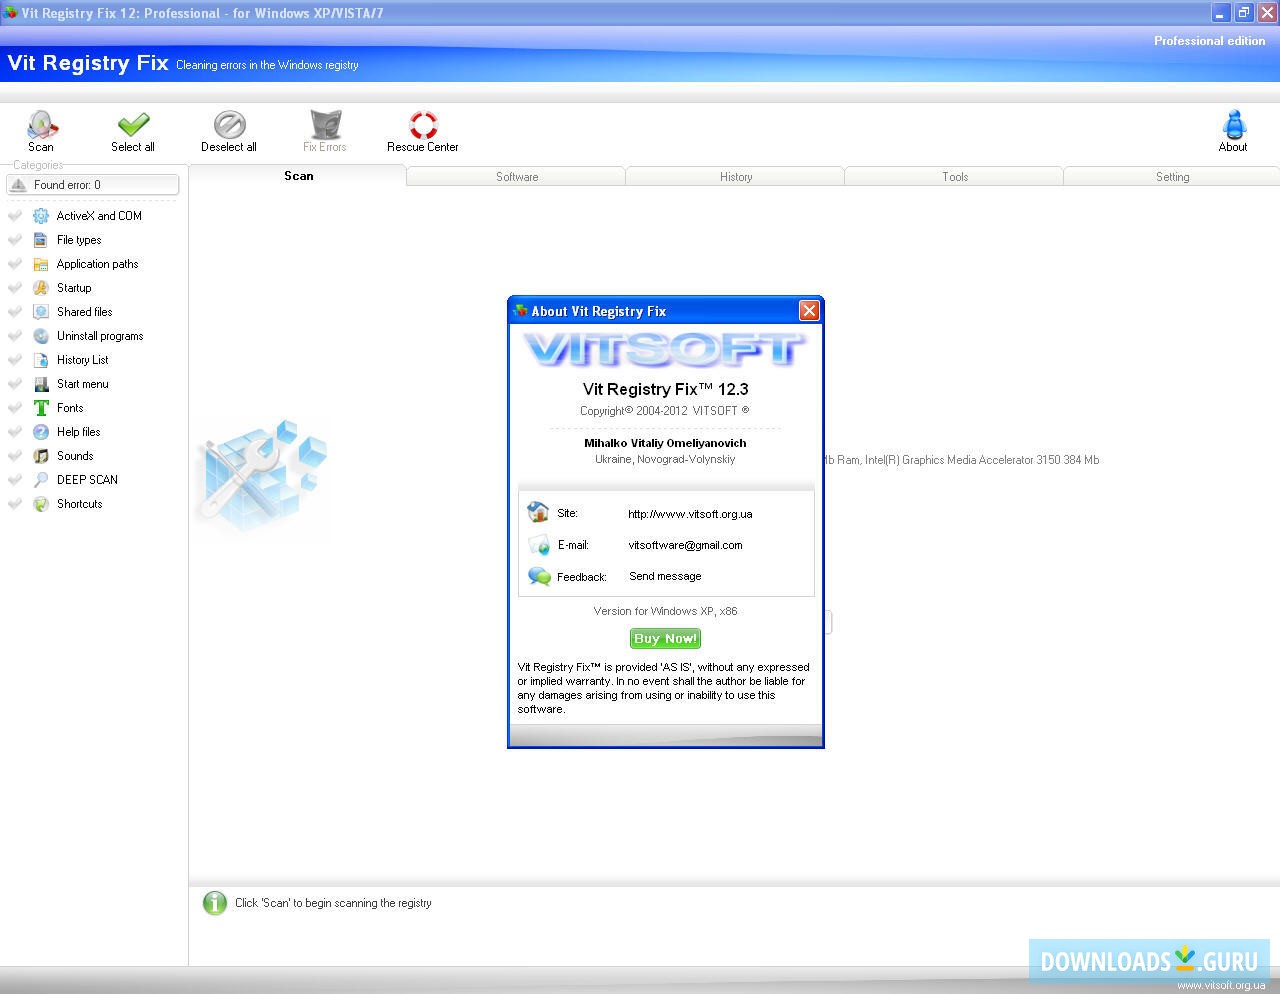 Vit Registry Fix Pro 14.8.5 download the new version for windows